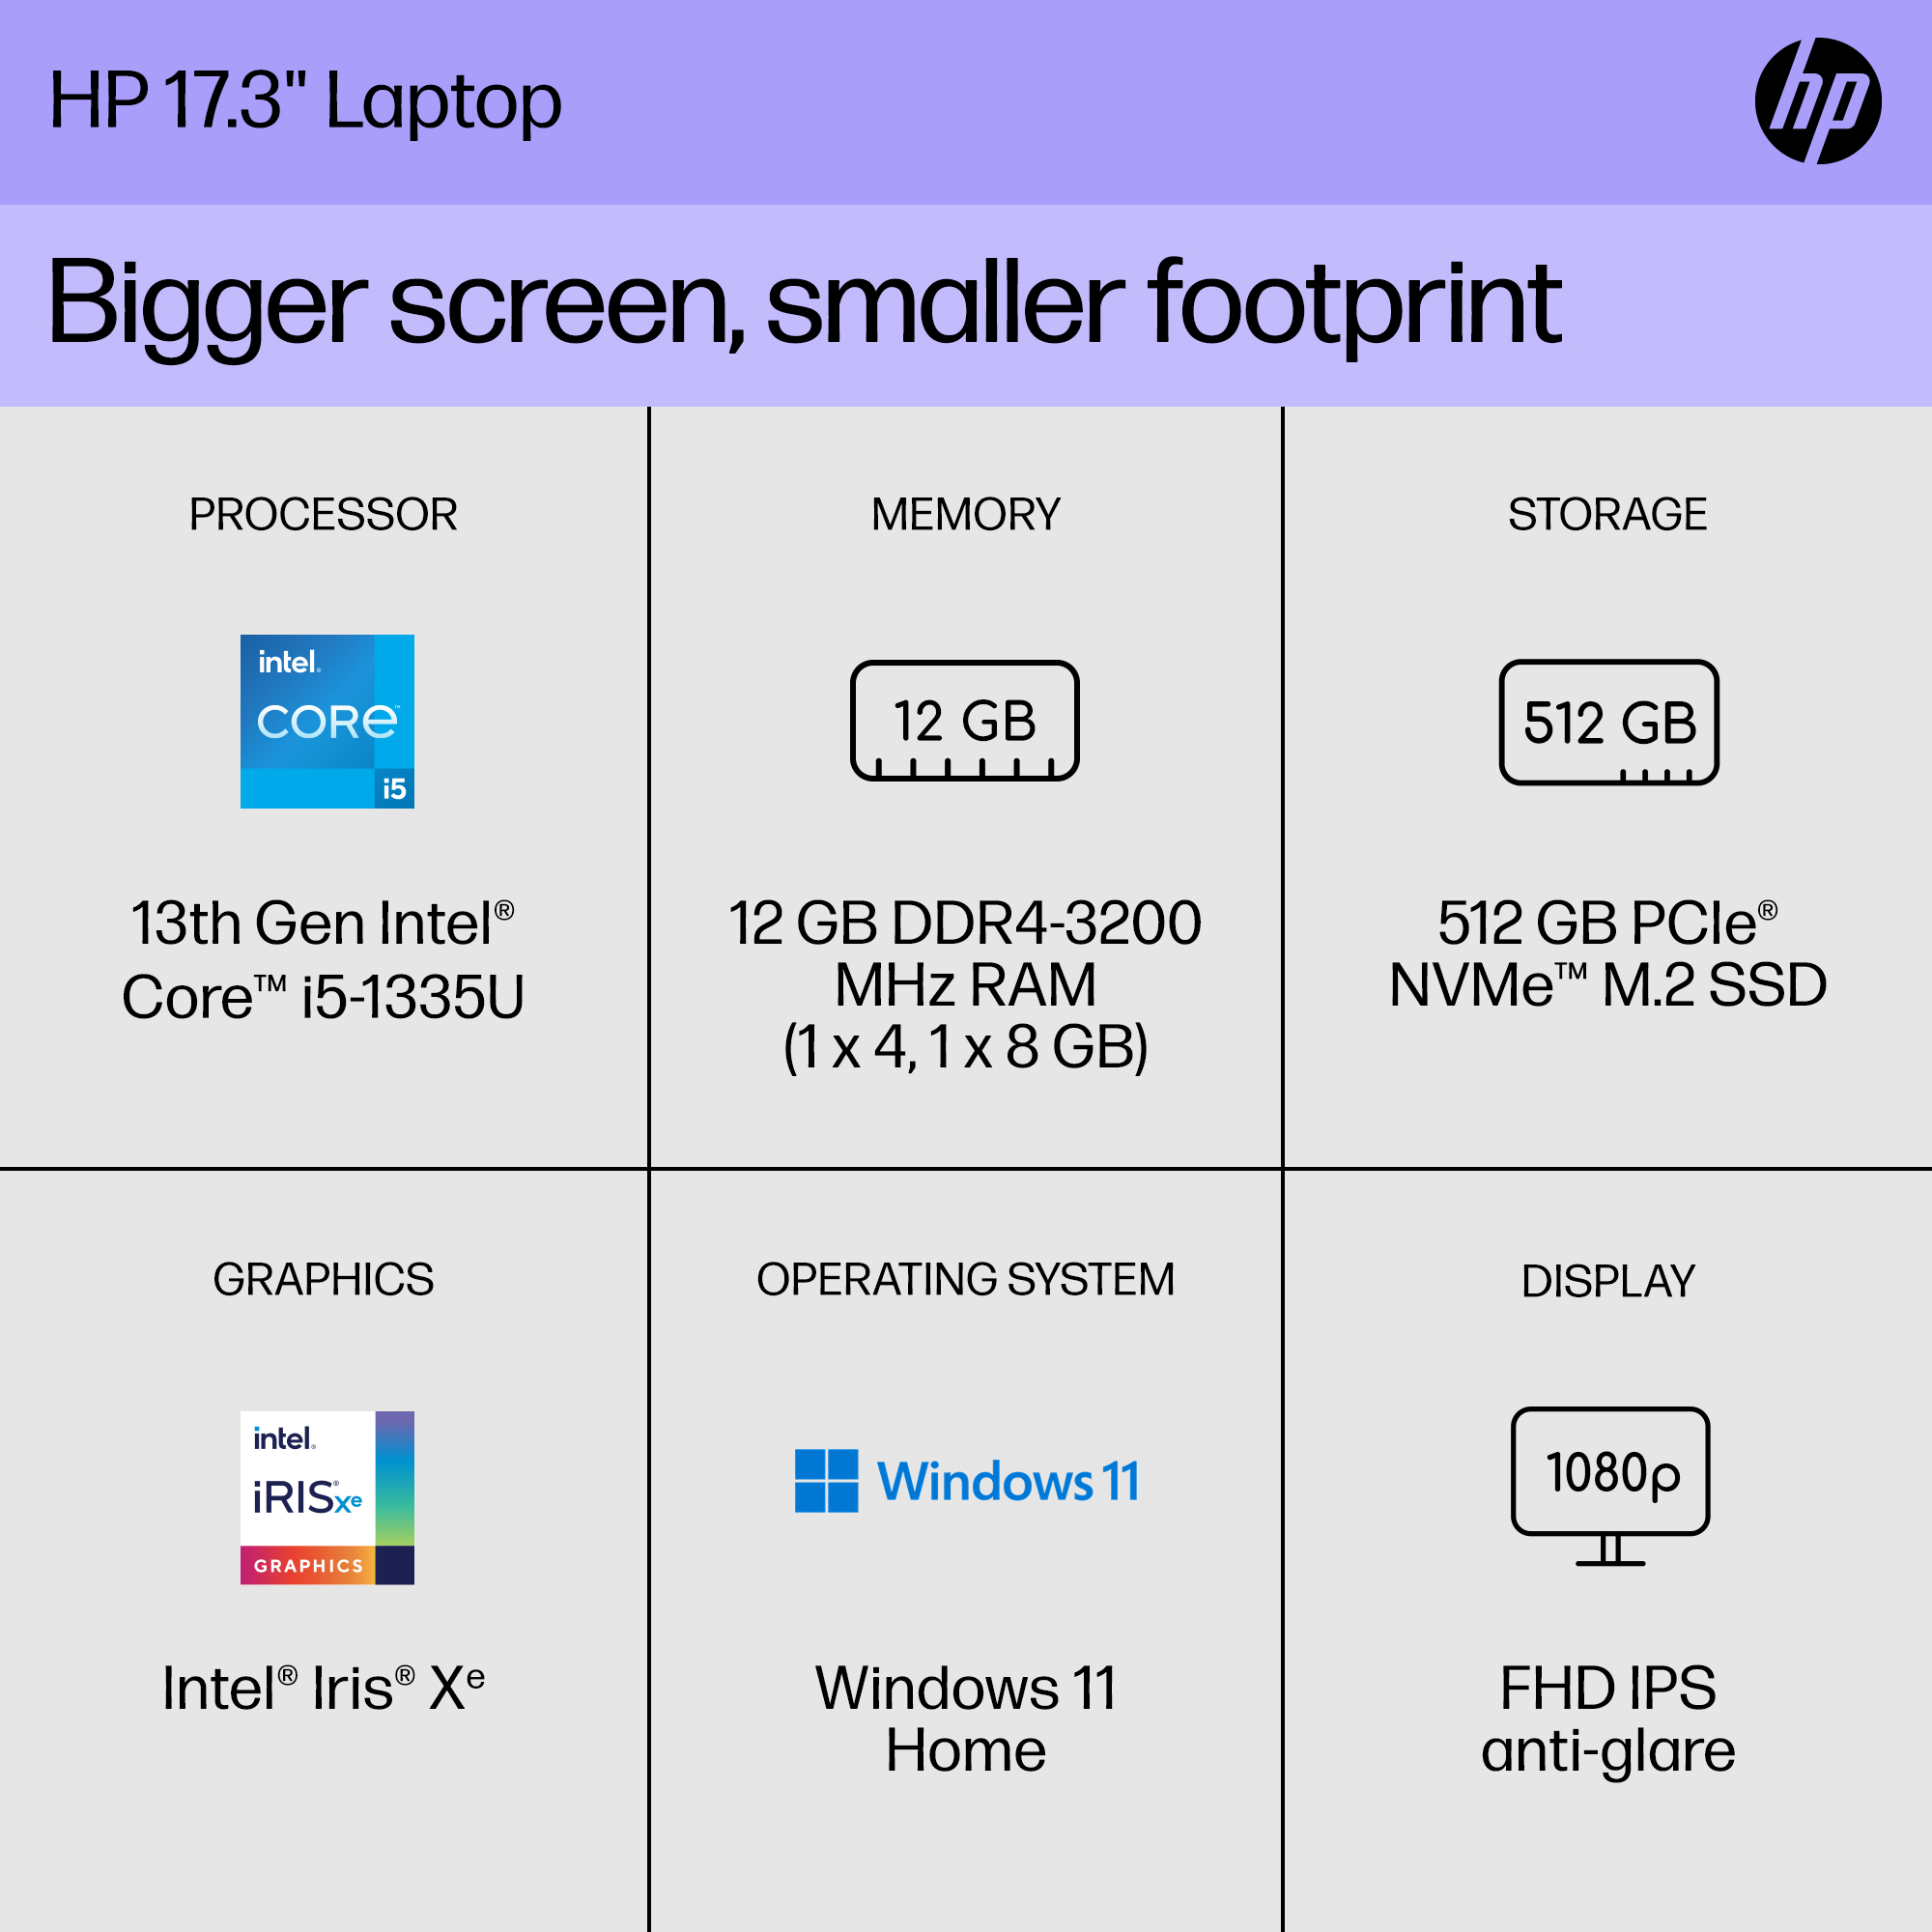 HP 17.3 Laptop - 13th Gen Intel Core i5-1335U - 1080p - Windows 11 | Costco